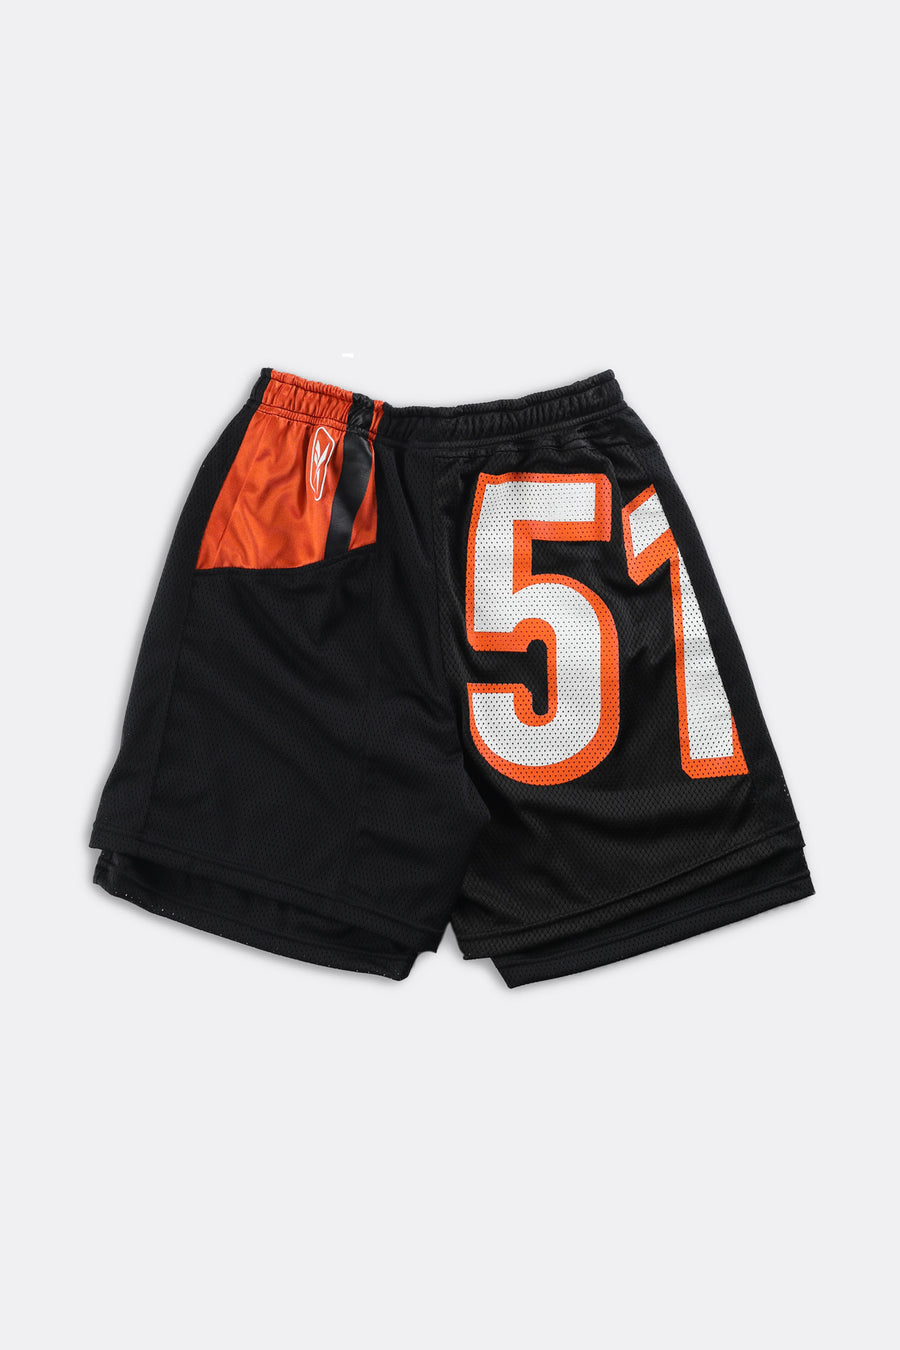 Unisex Rework Bengals NFL Jersey Shorts - Women-M, Men-S